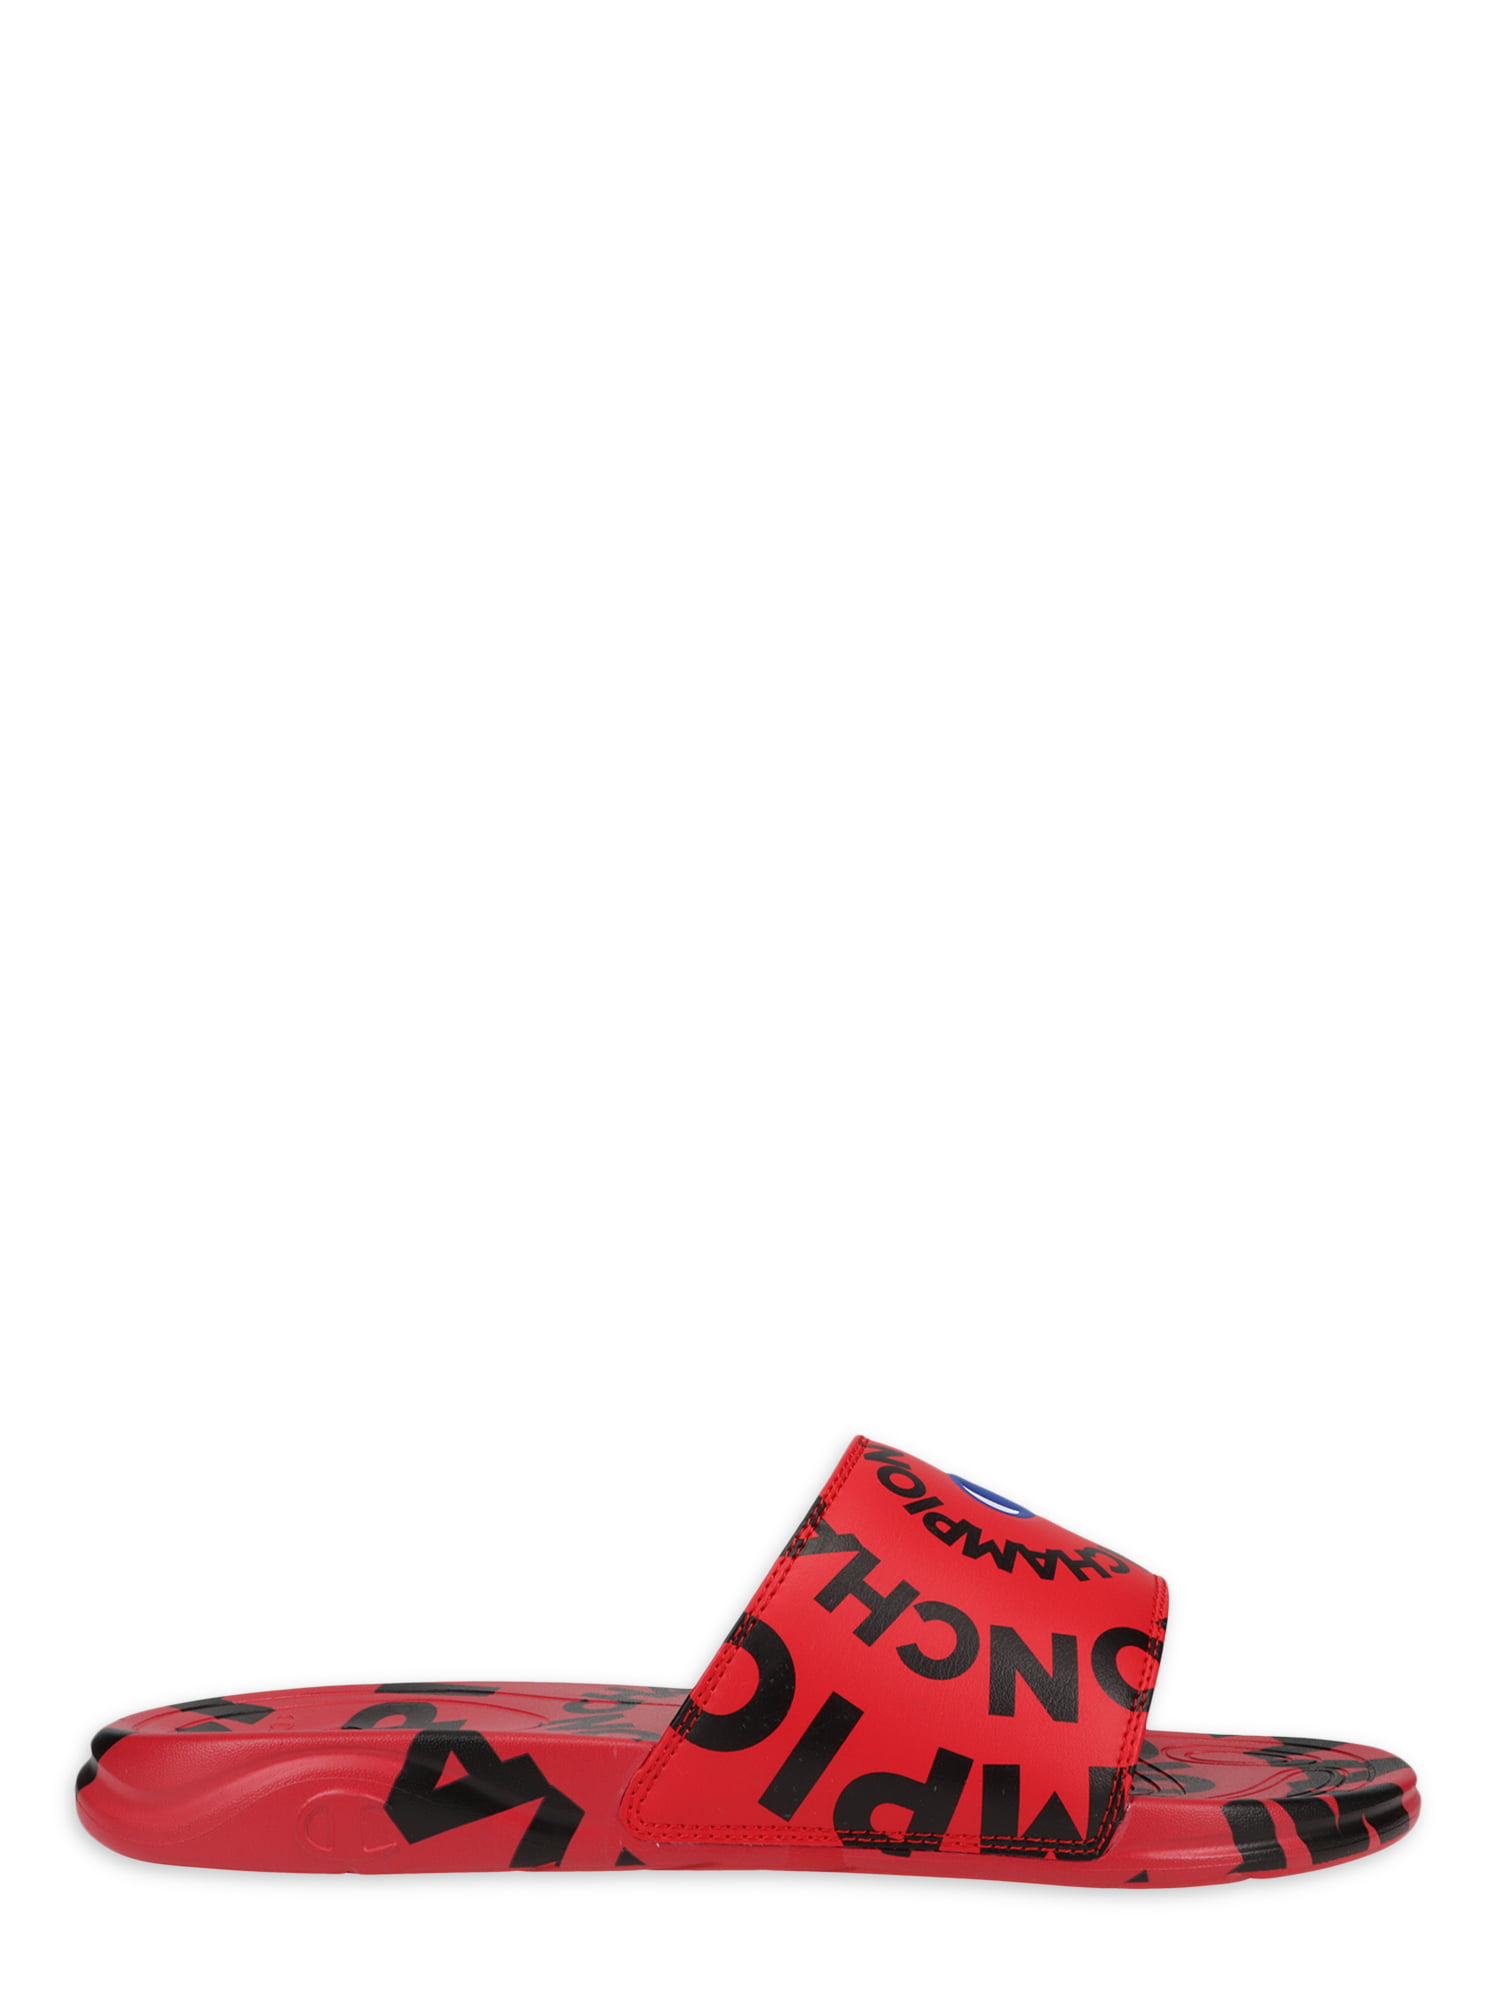 Champion Mens Size 10 IPO LV Sandal Shower Slides Las Vegas Embossed Print